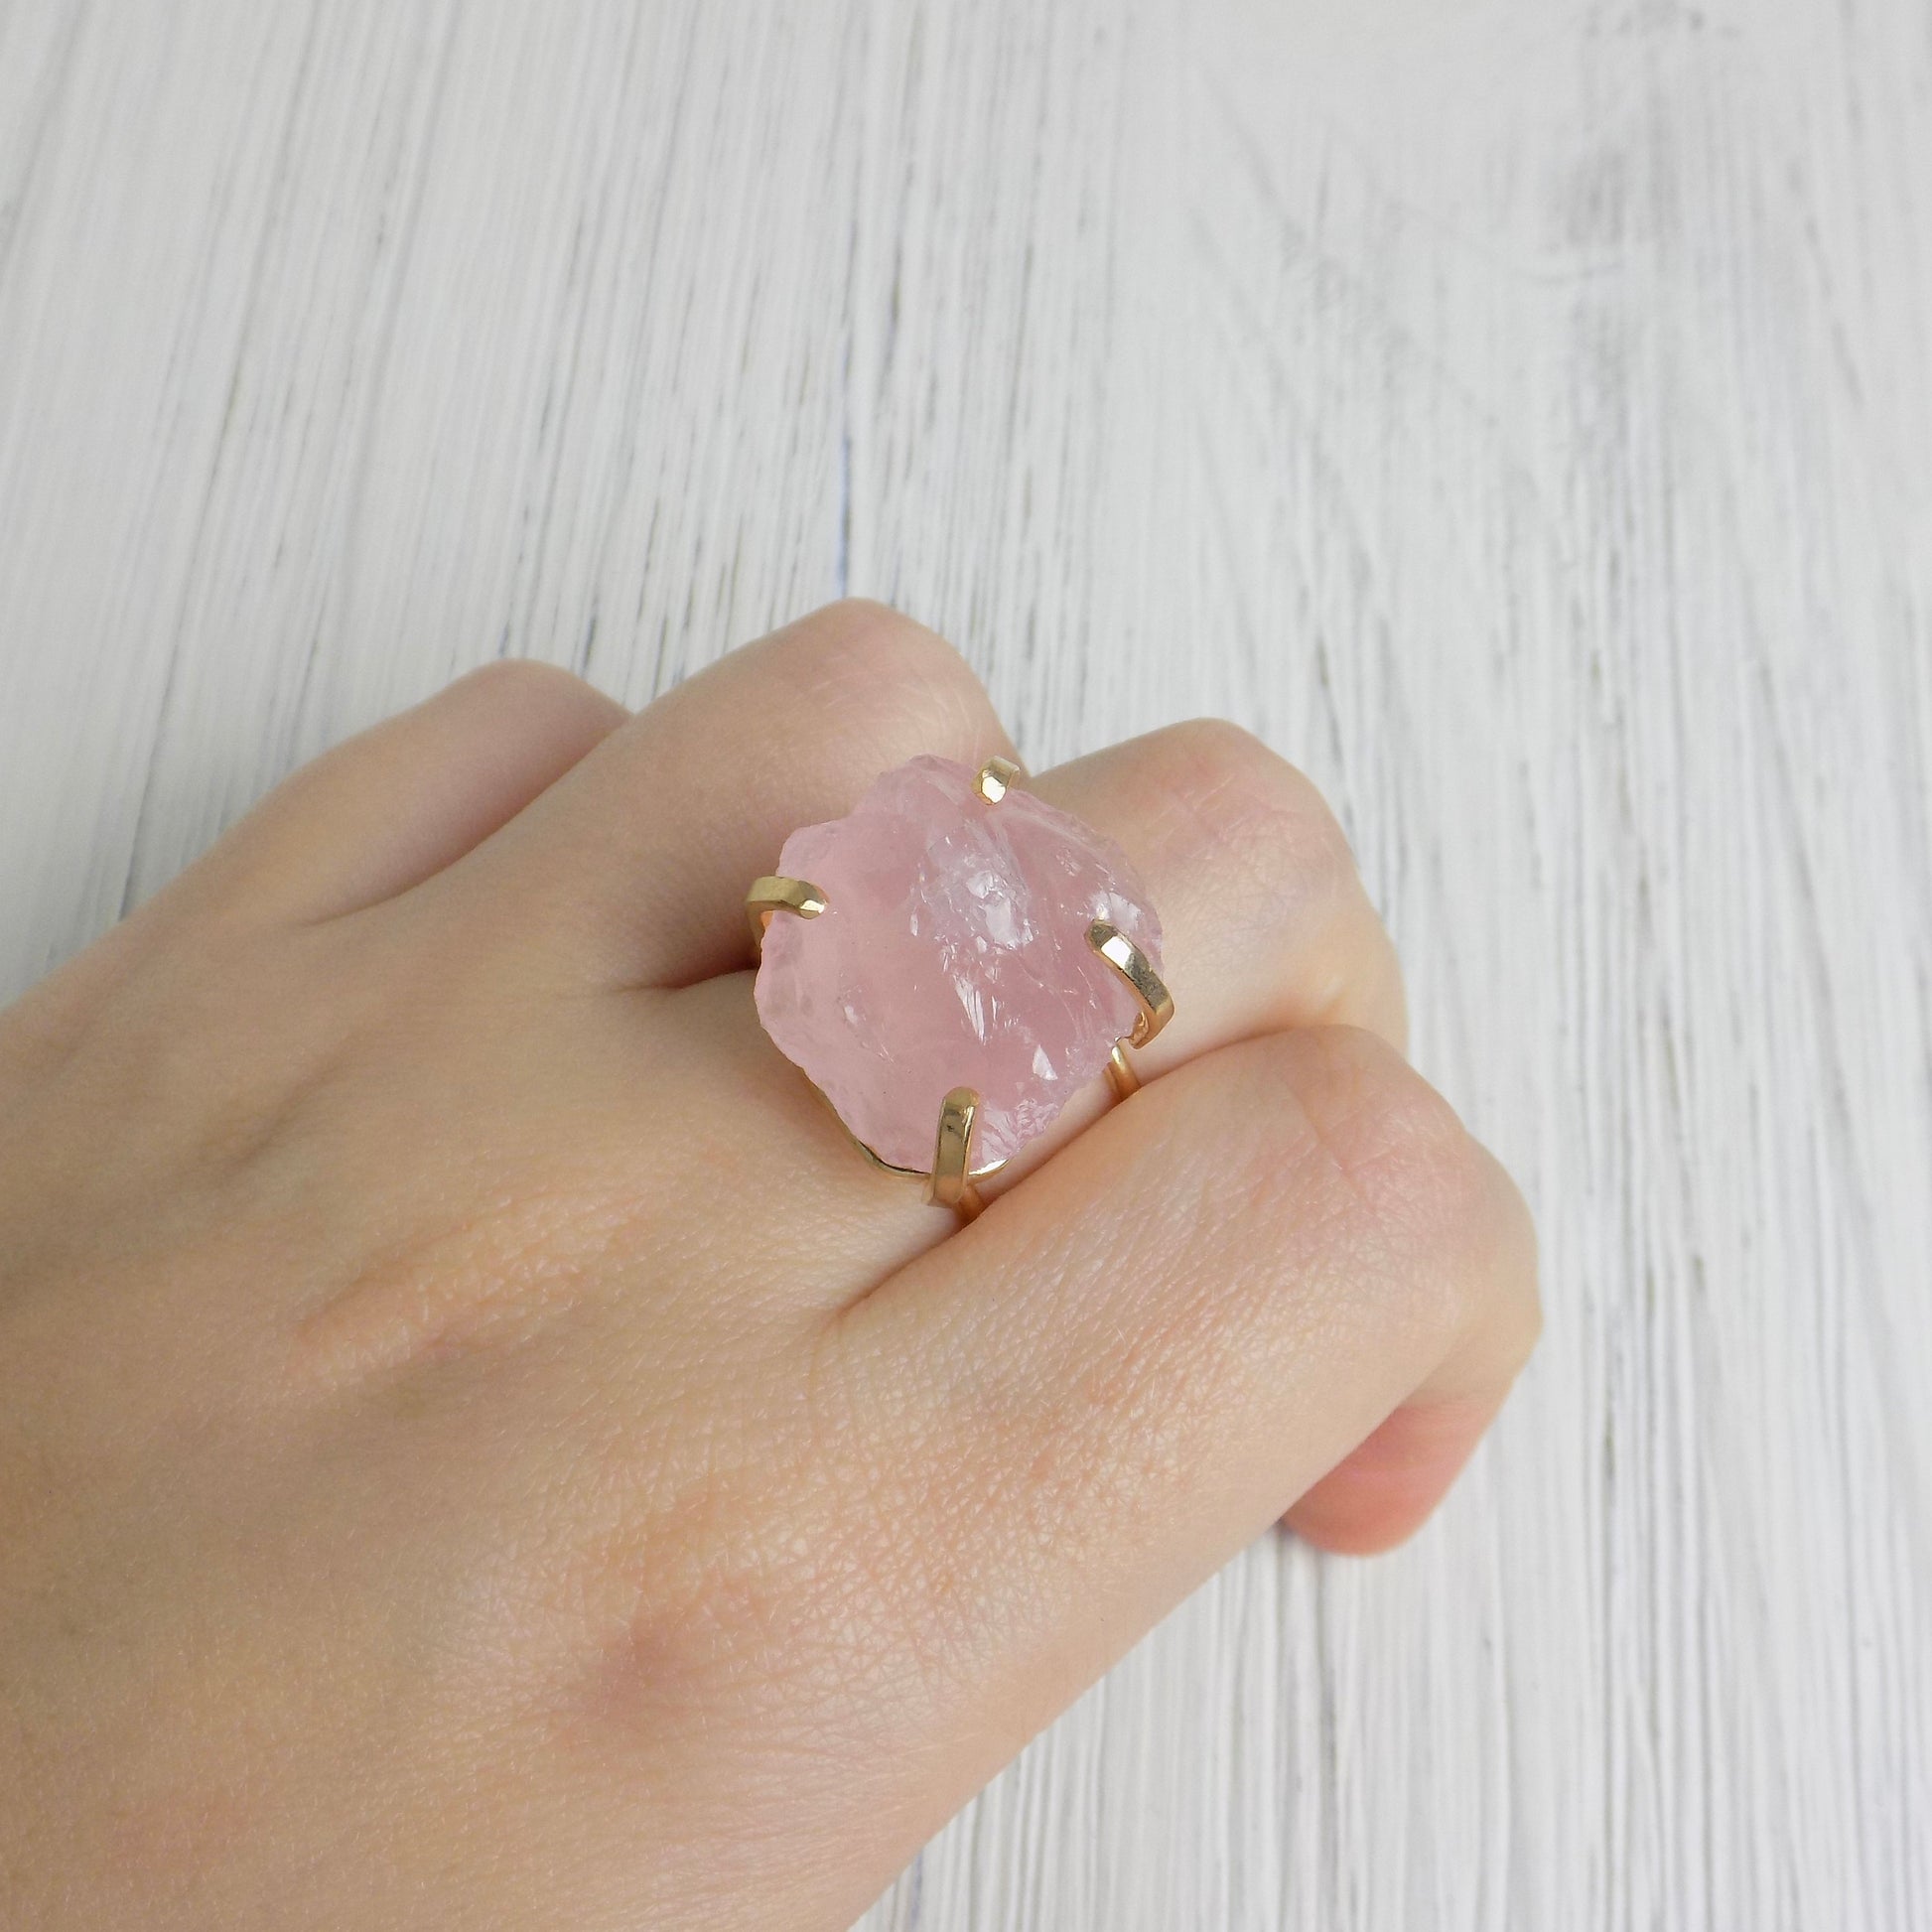 Light Pink Raw Rose Quartz Gemstone Ring Adjustable Gold Plated, G14-273